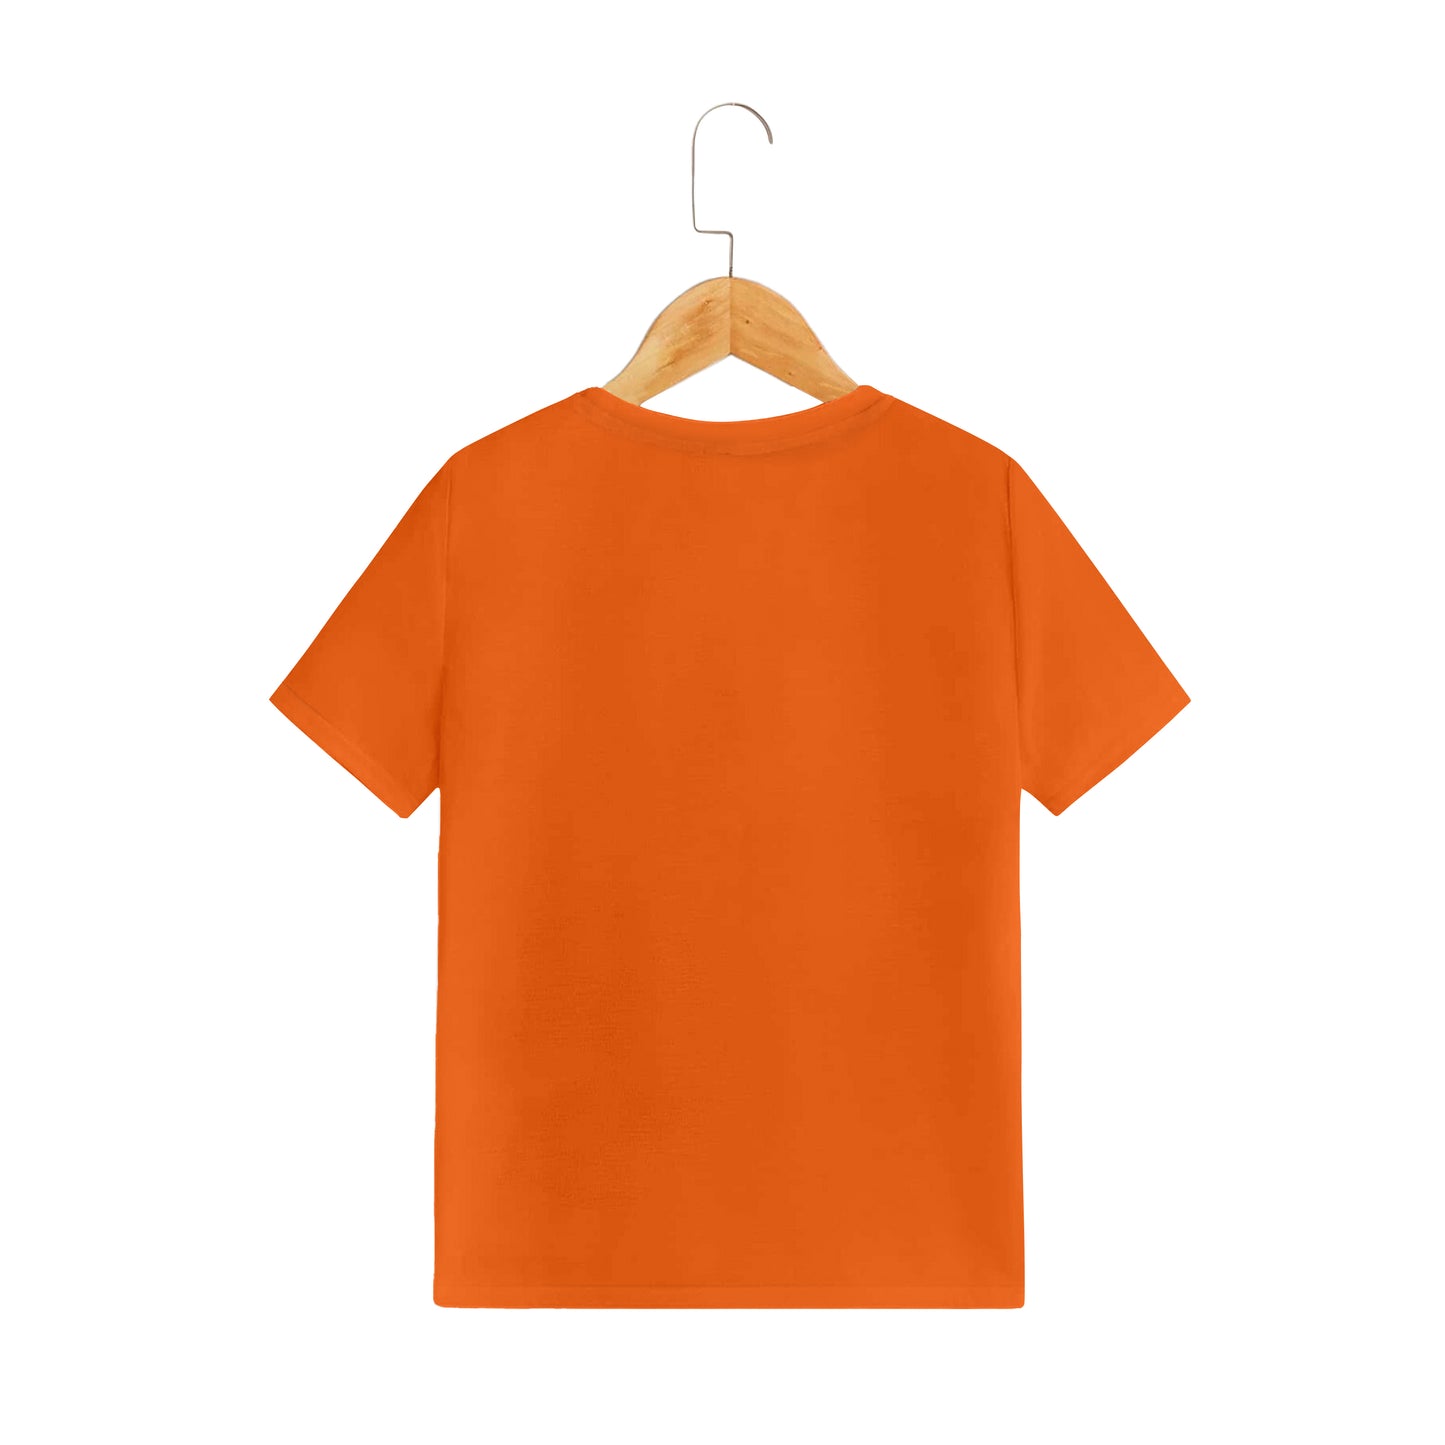 Manlino Kids Orange half sleeve round neck tshirt